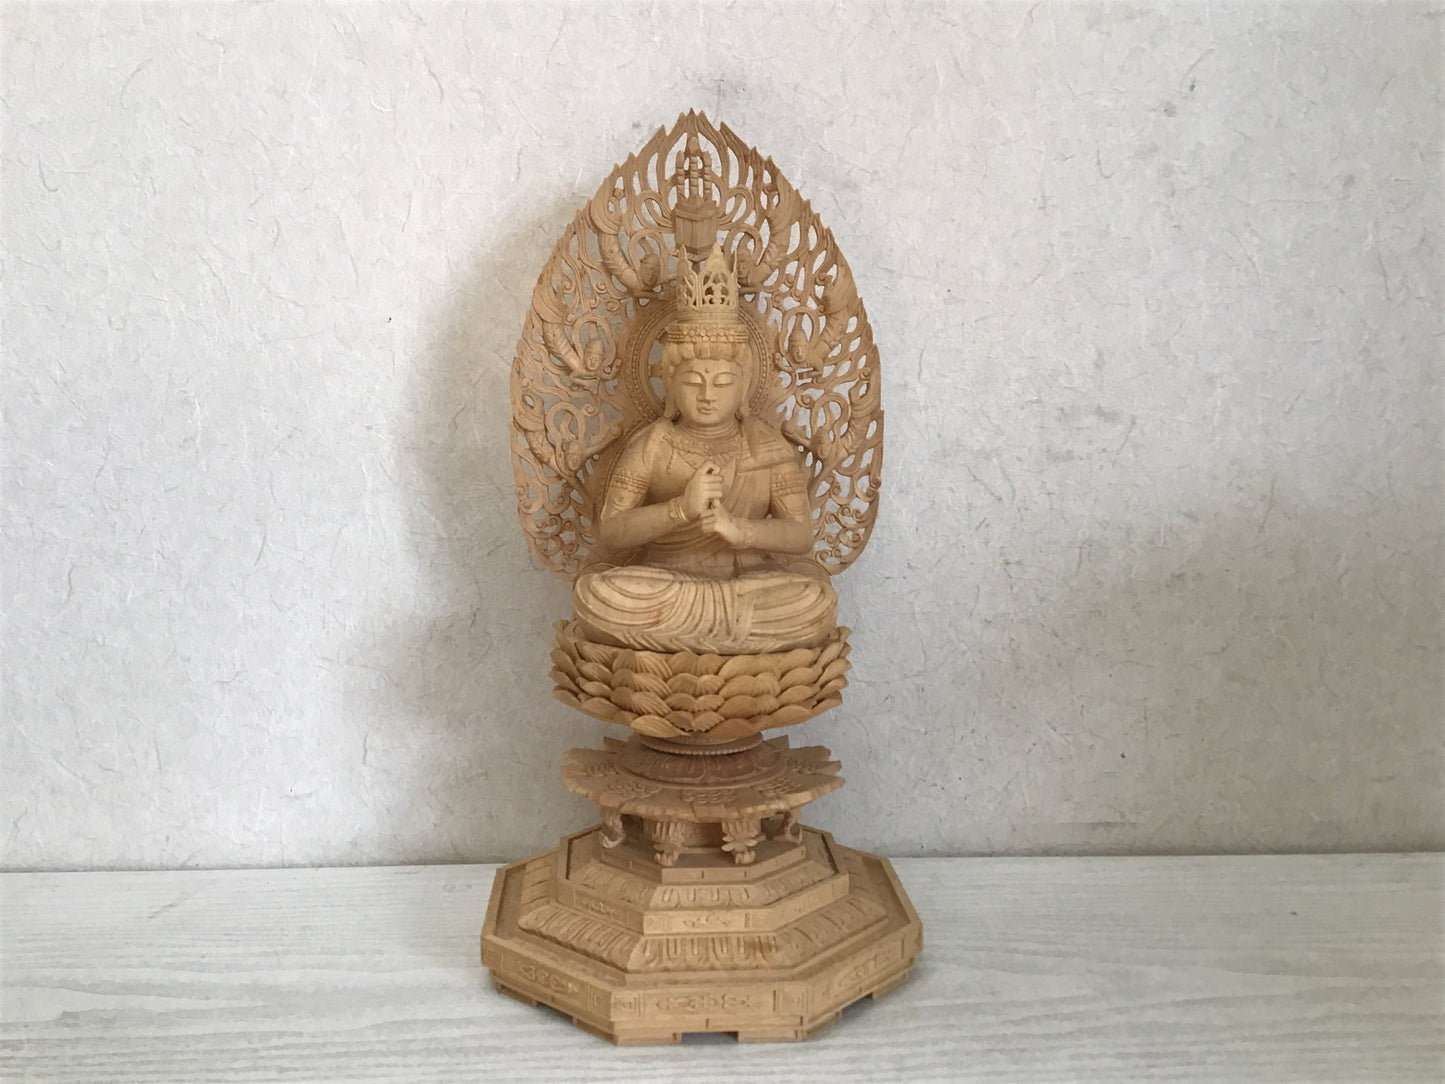 Y2057 STATUE Sitting Buddha image figurine wood carving Japanese antique